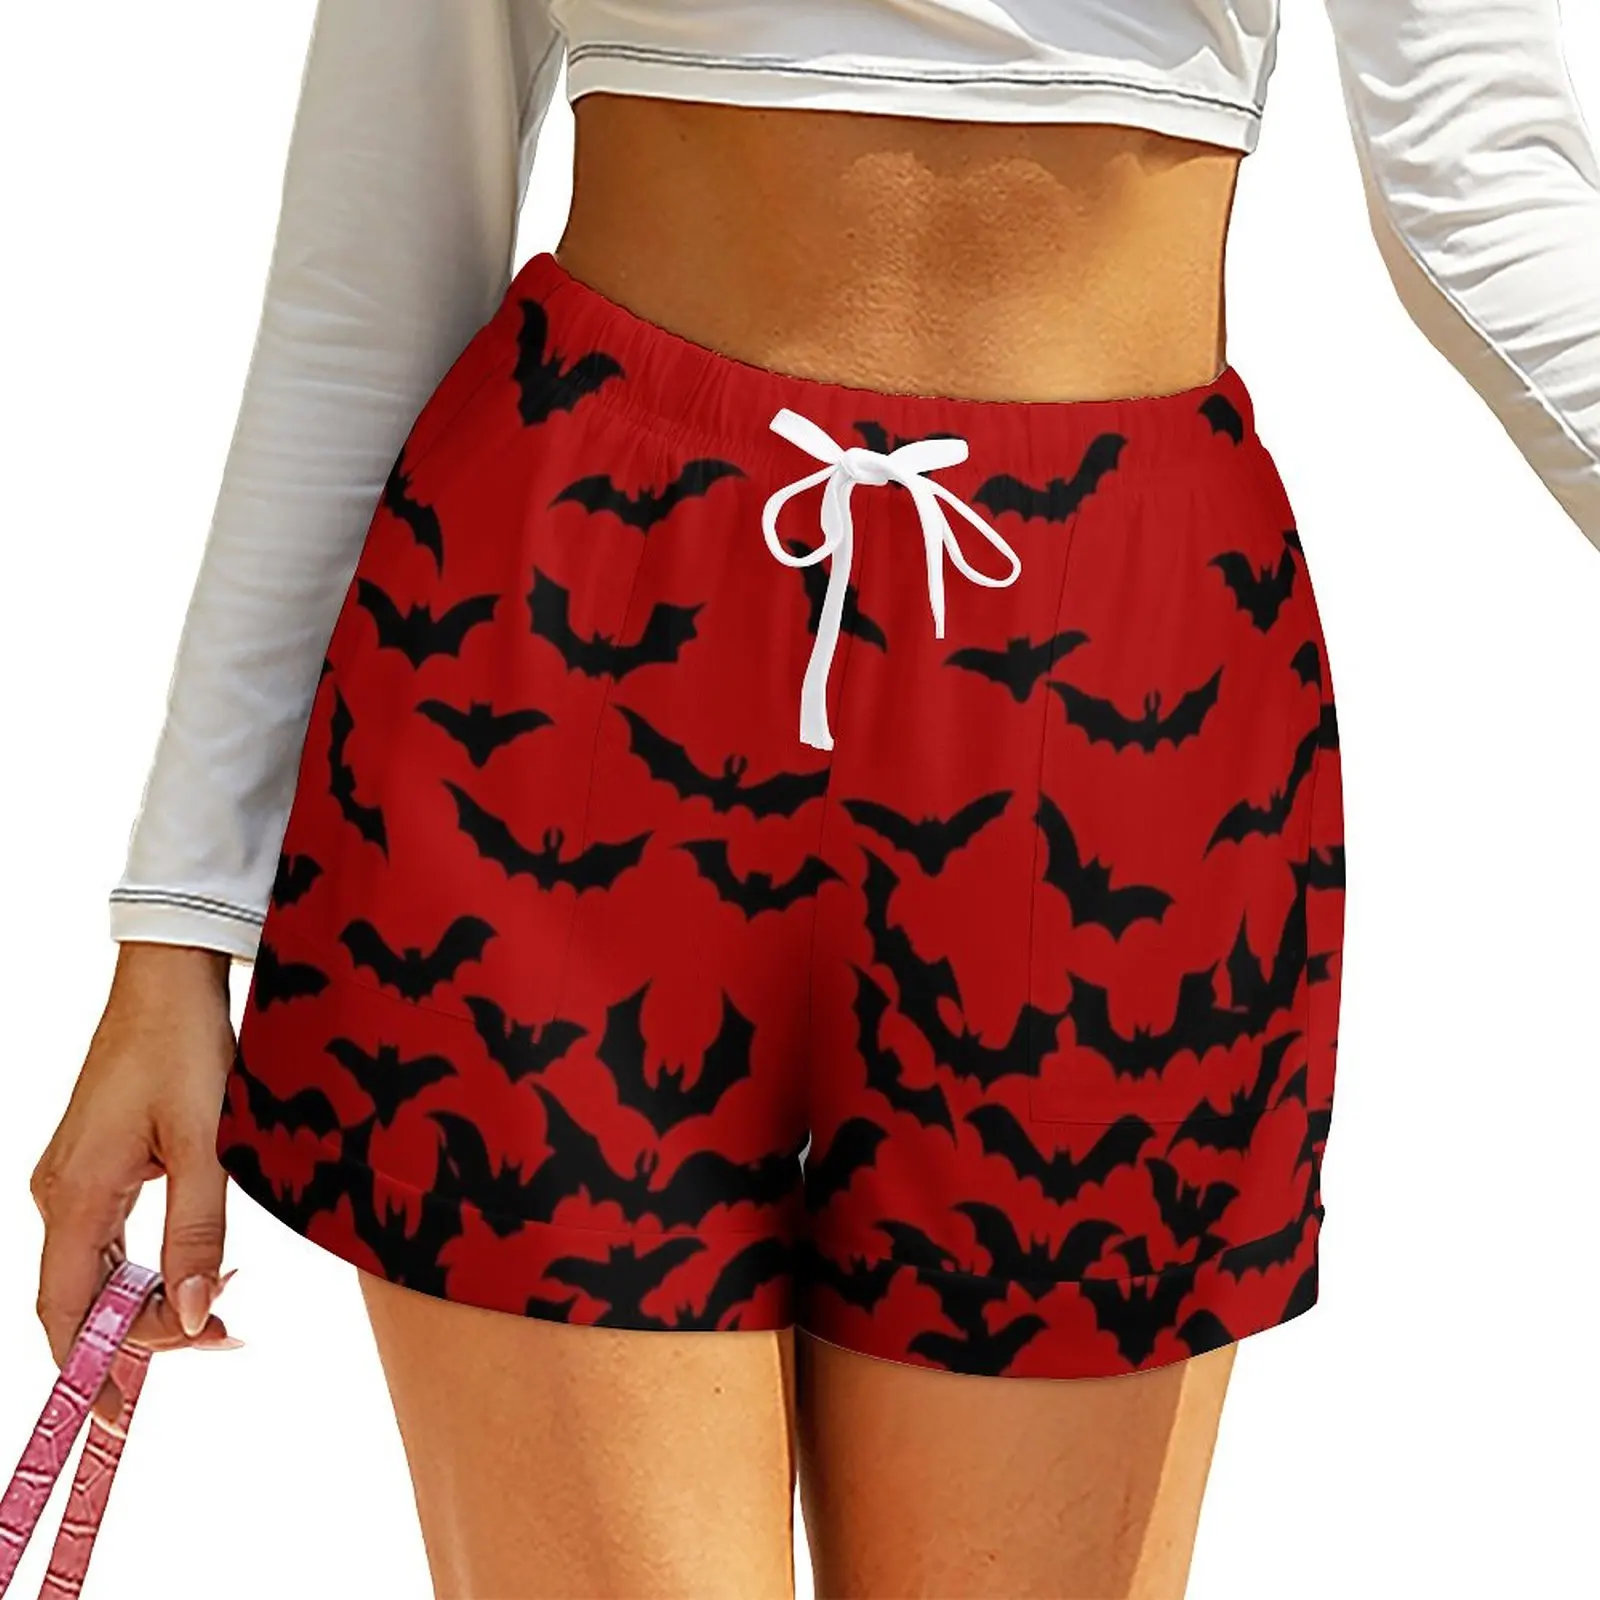 

Just Bats Red Shorts Spooky Halloween Oversized Streetwear Shorts High Waisted Modern Short Pants Women Graphic Pockets Bottoms